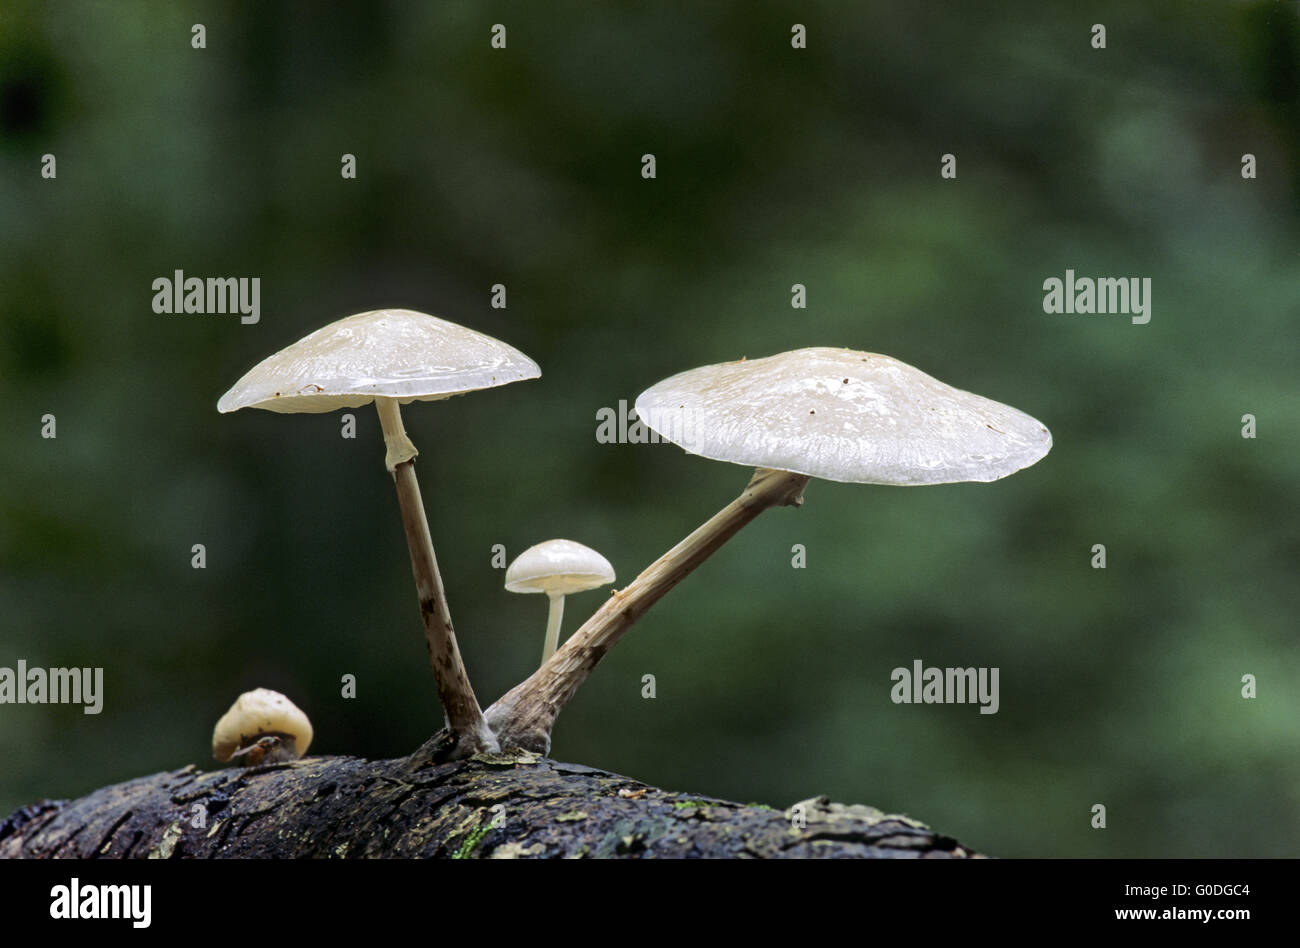 Porcelain Fungus grows cespitose at beeches Stock Photo